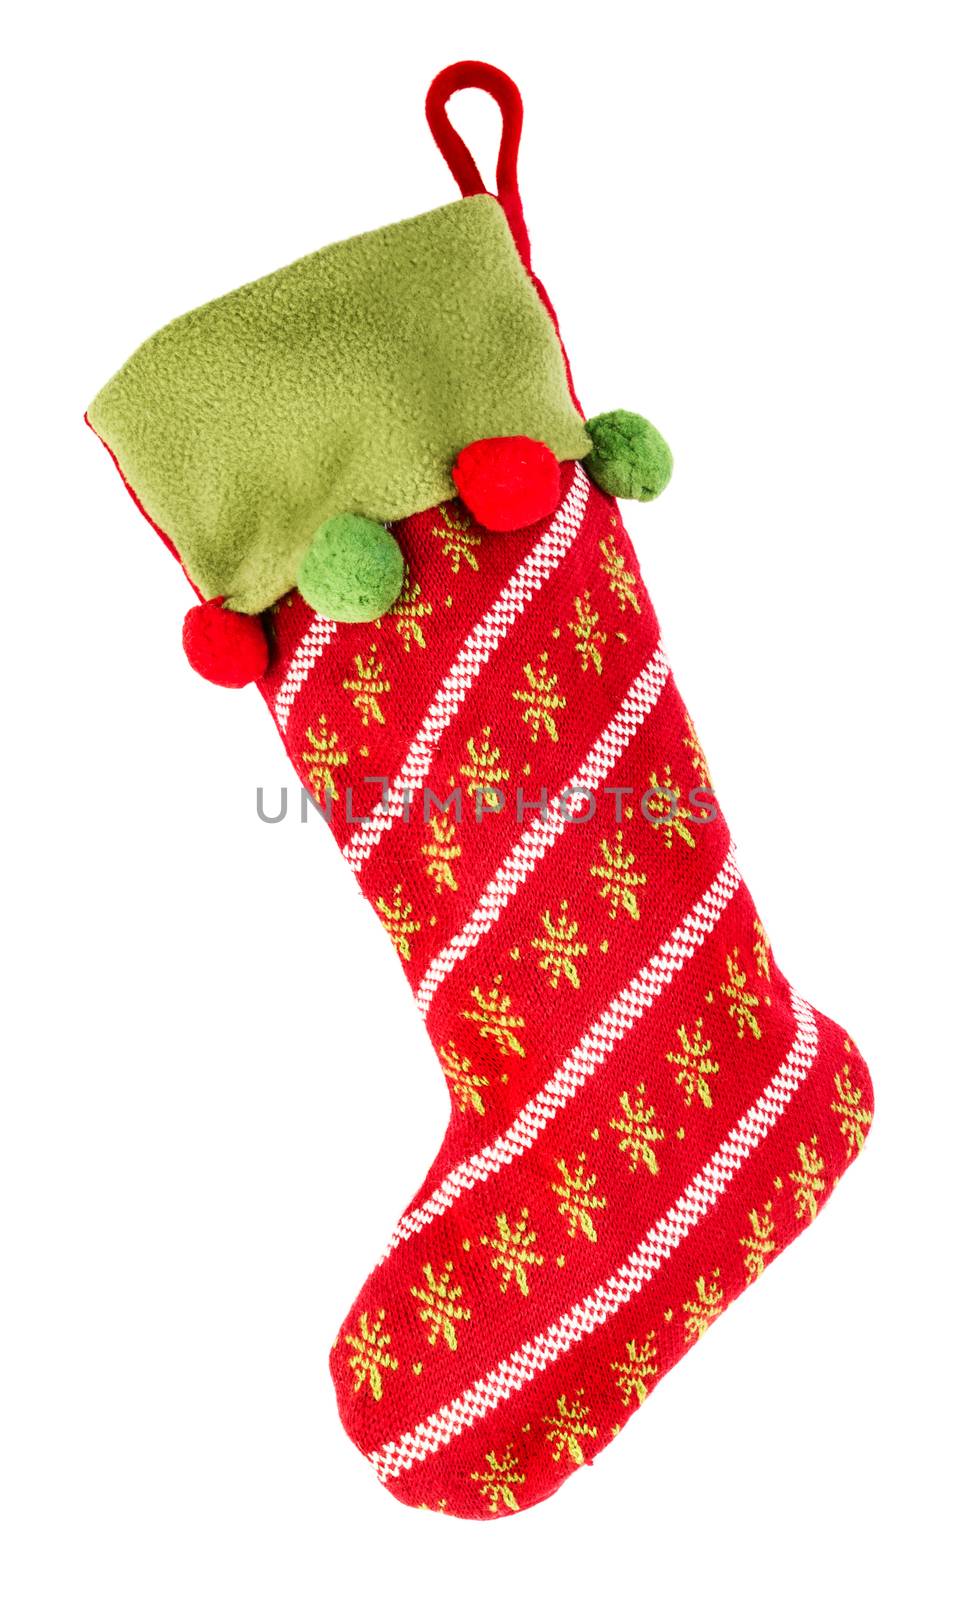 Christmas stocking by Valengilda